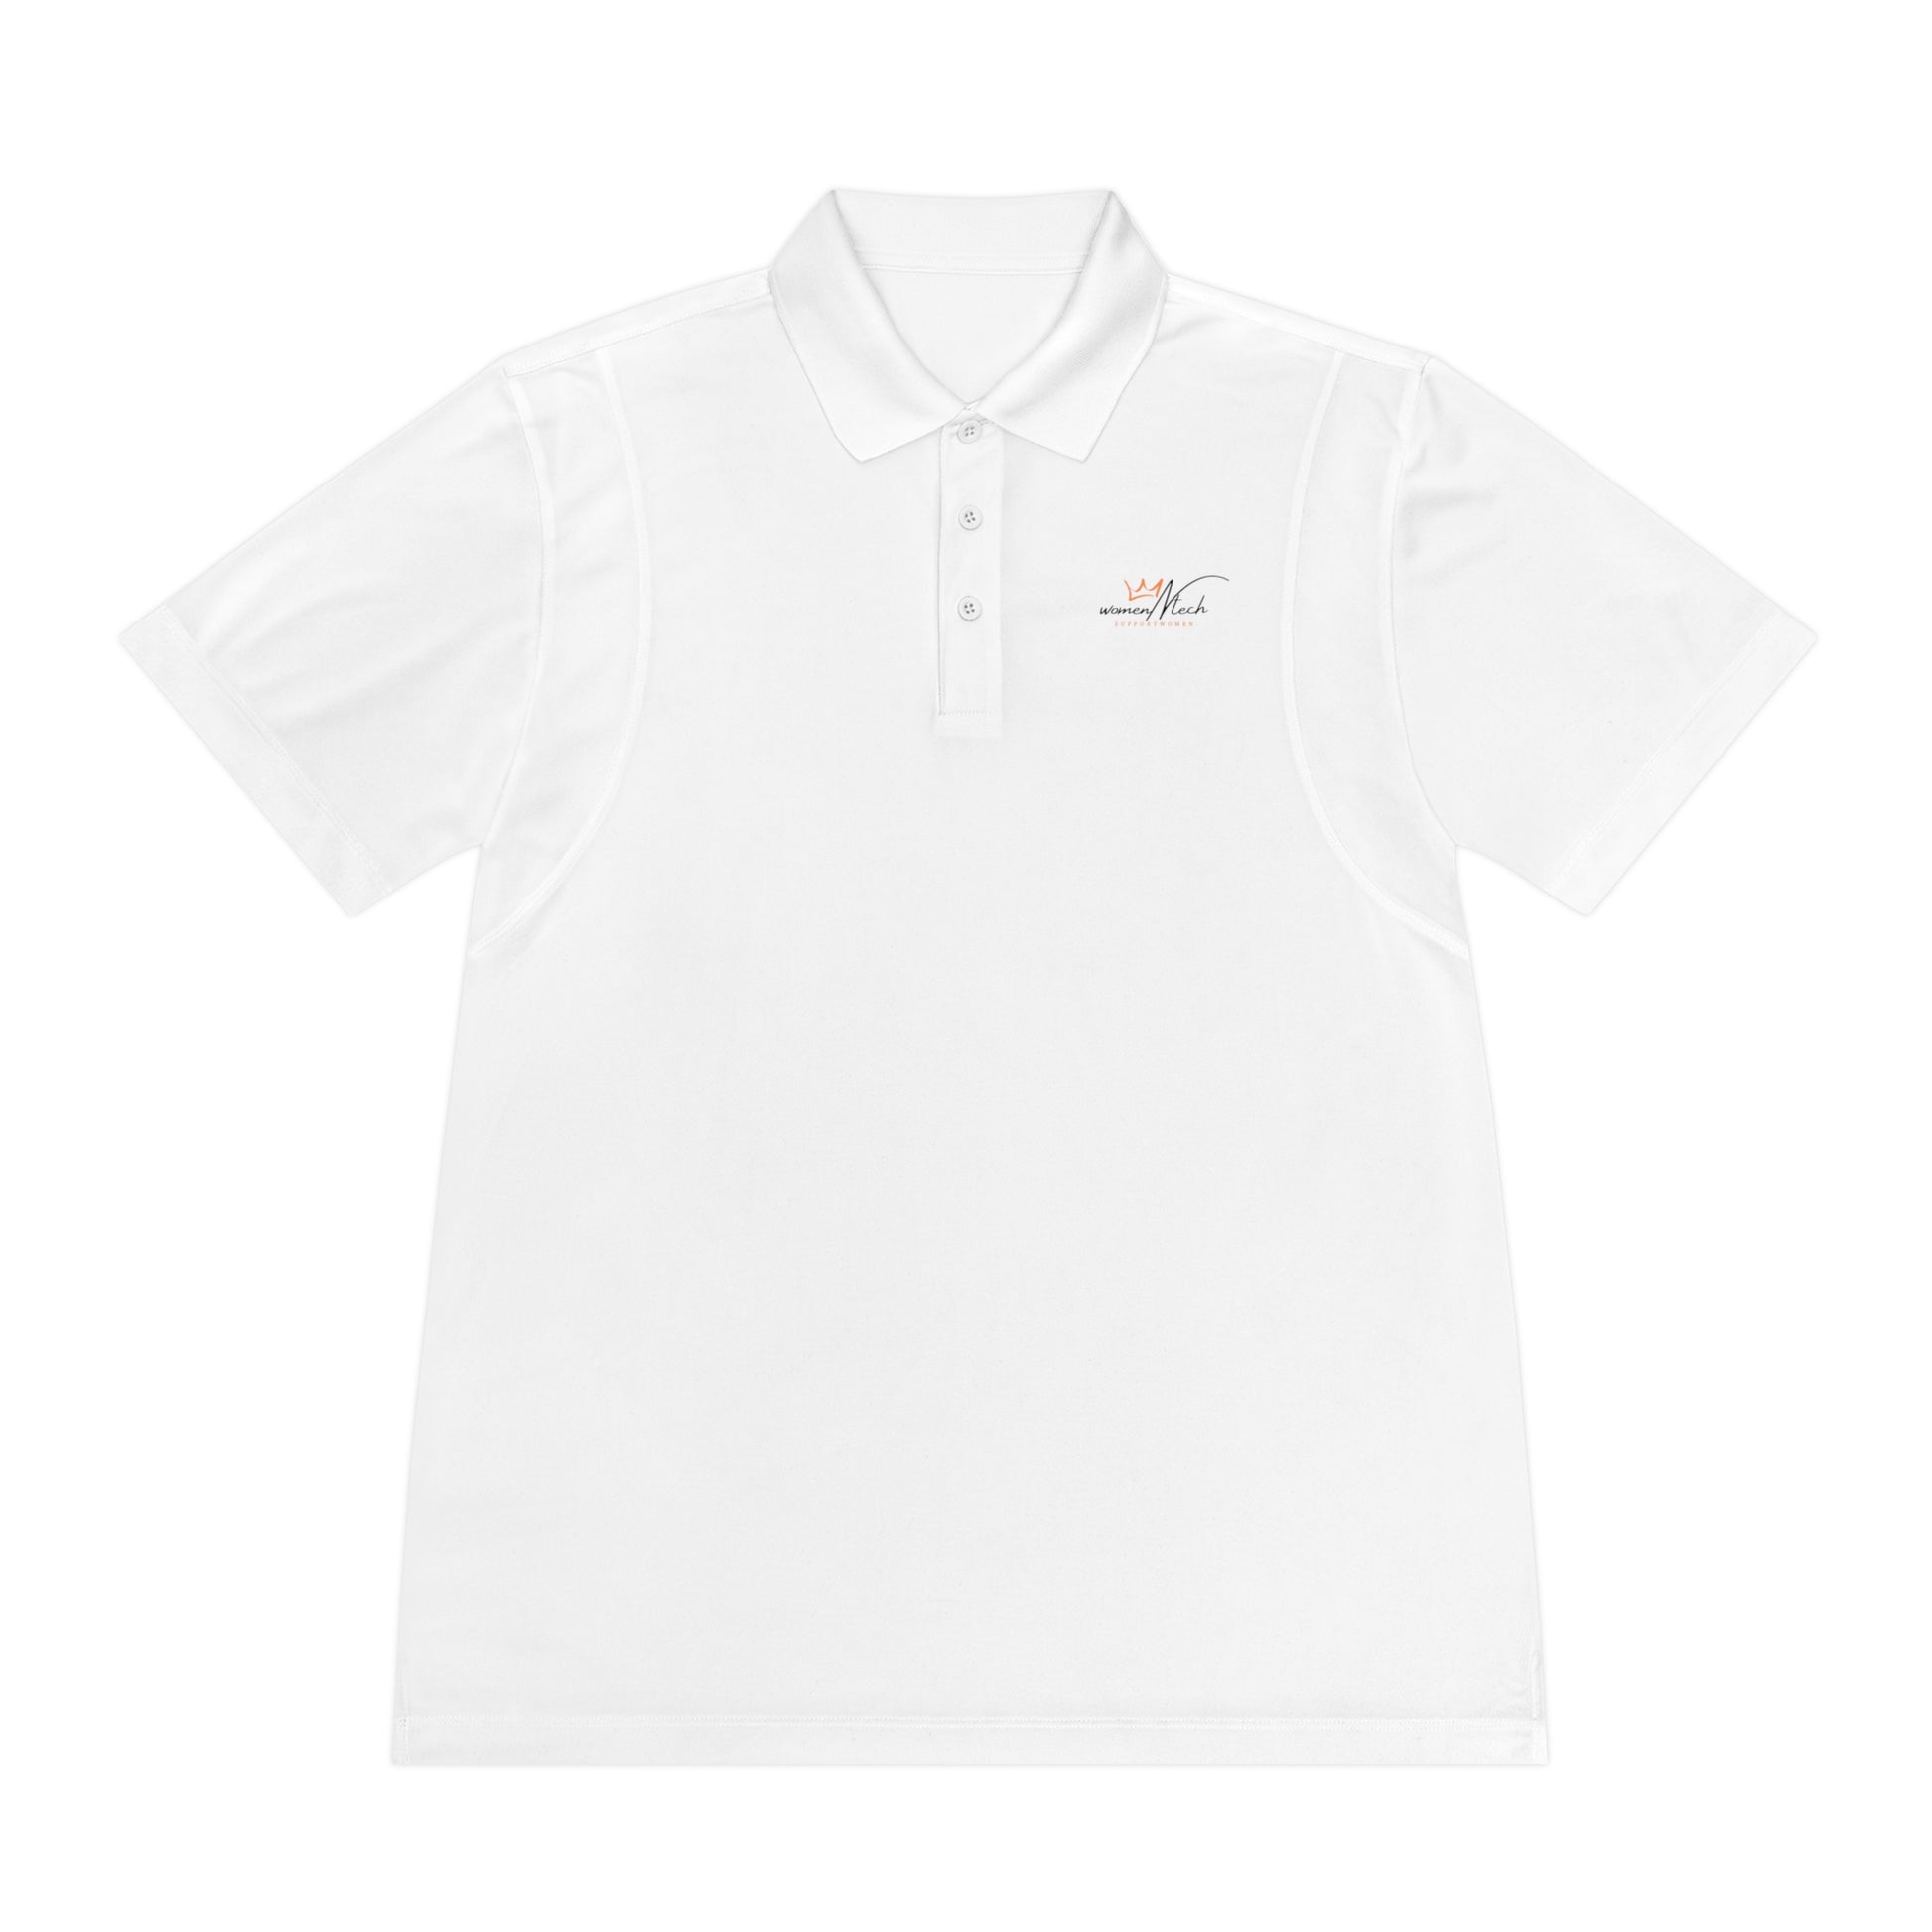 Best Quality Full Men's Sport Polo Shirt - Buy Now From WomenNtech